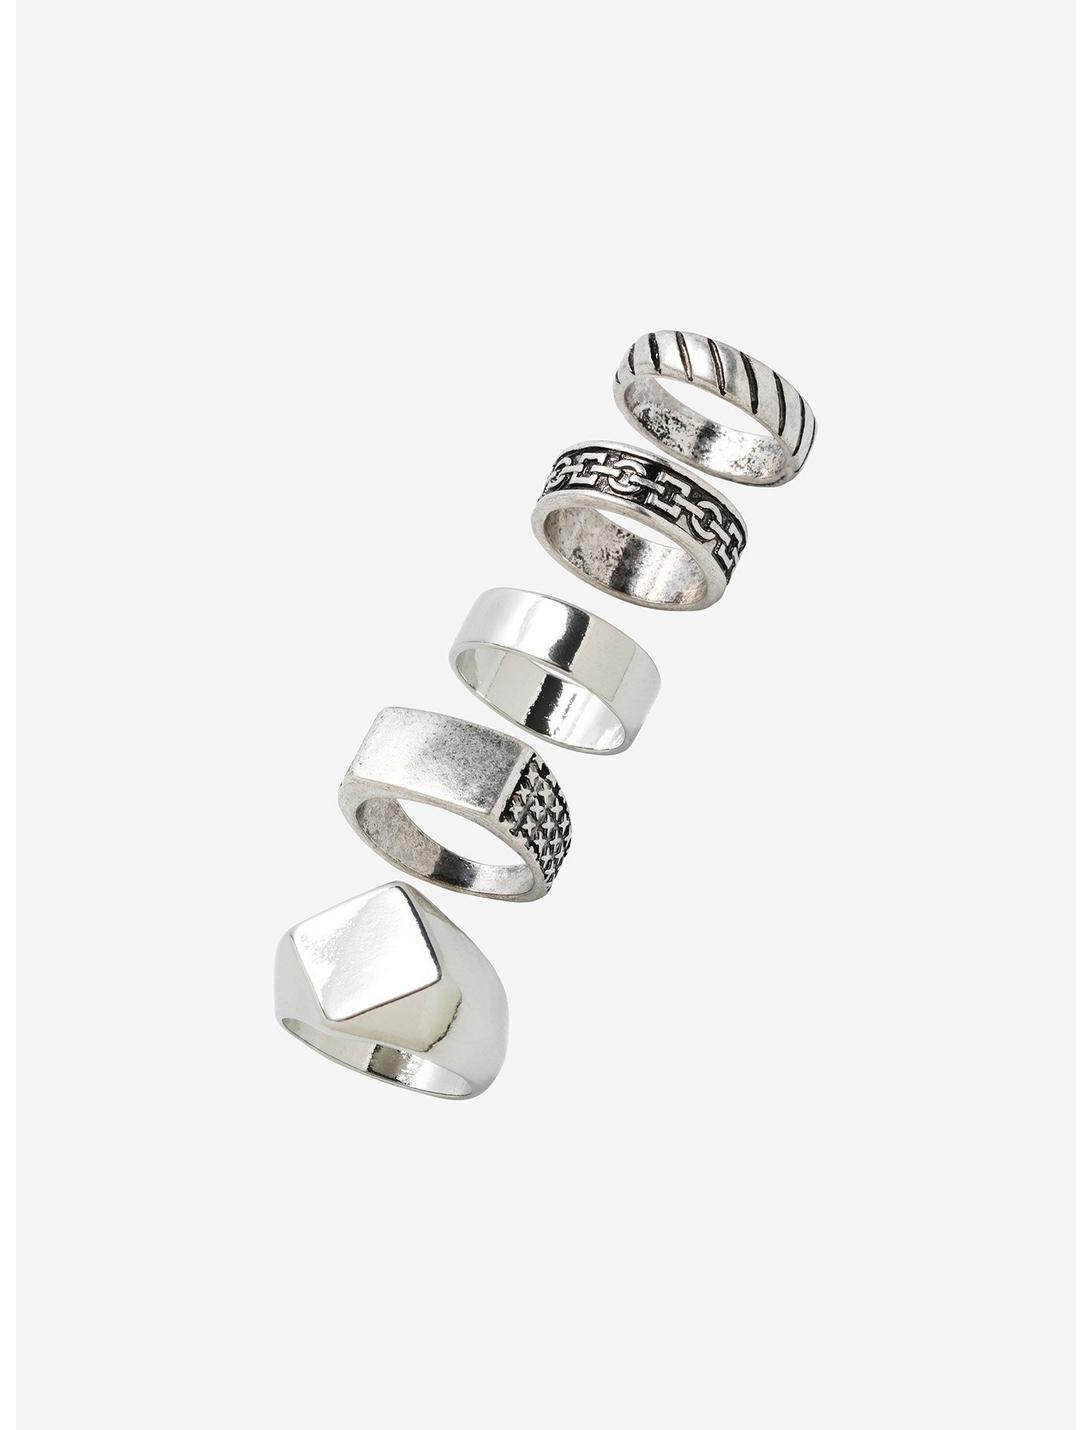 Burnished Silver Tone Multi Size Ring Set